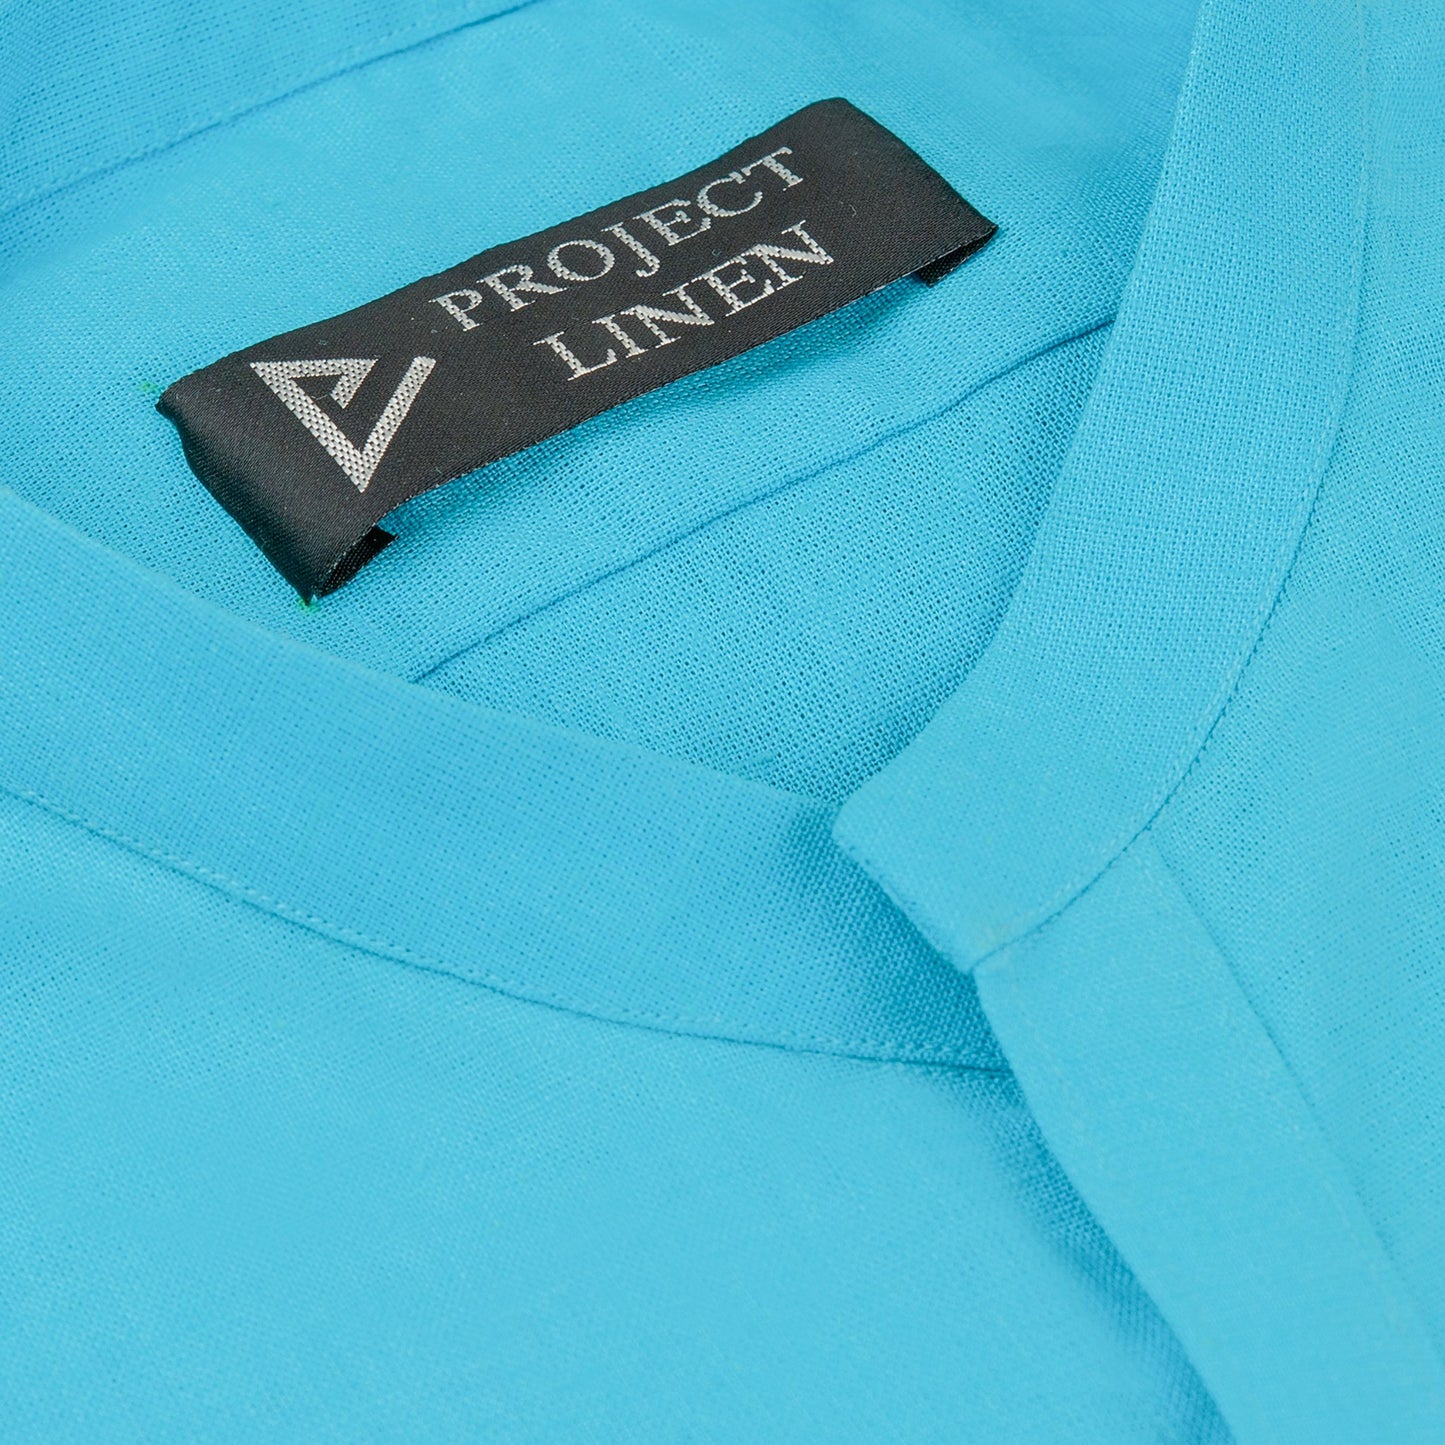 Turquoise Blue Band Collar Linen Shirt